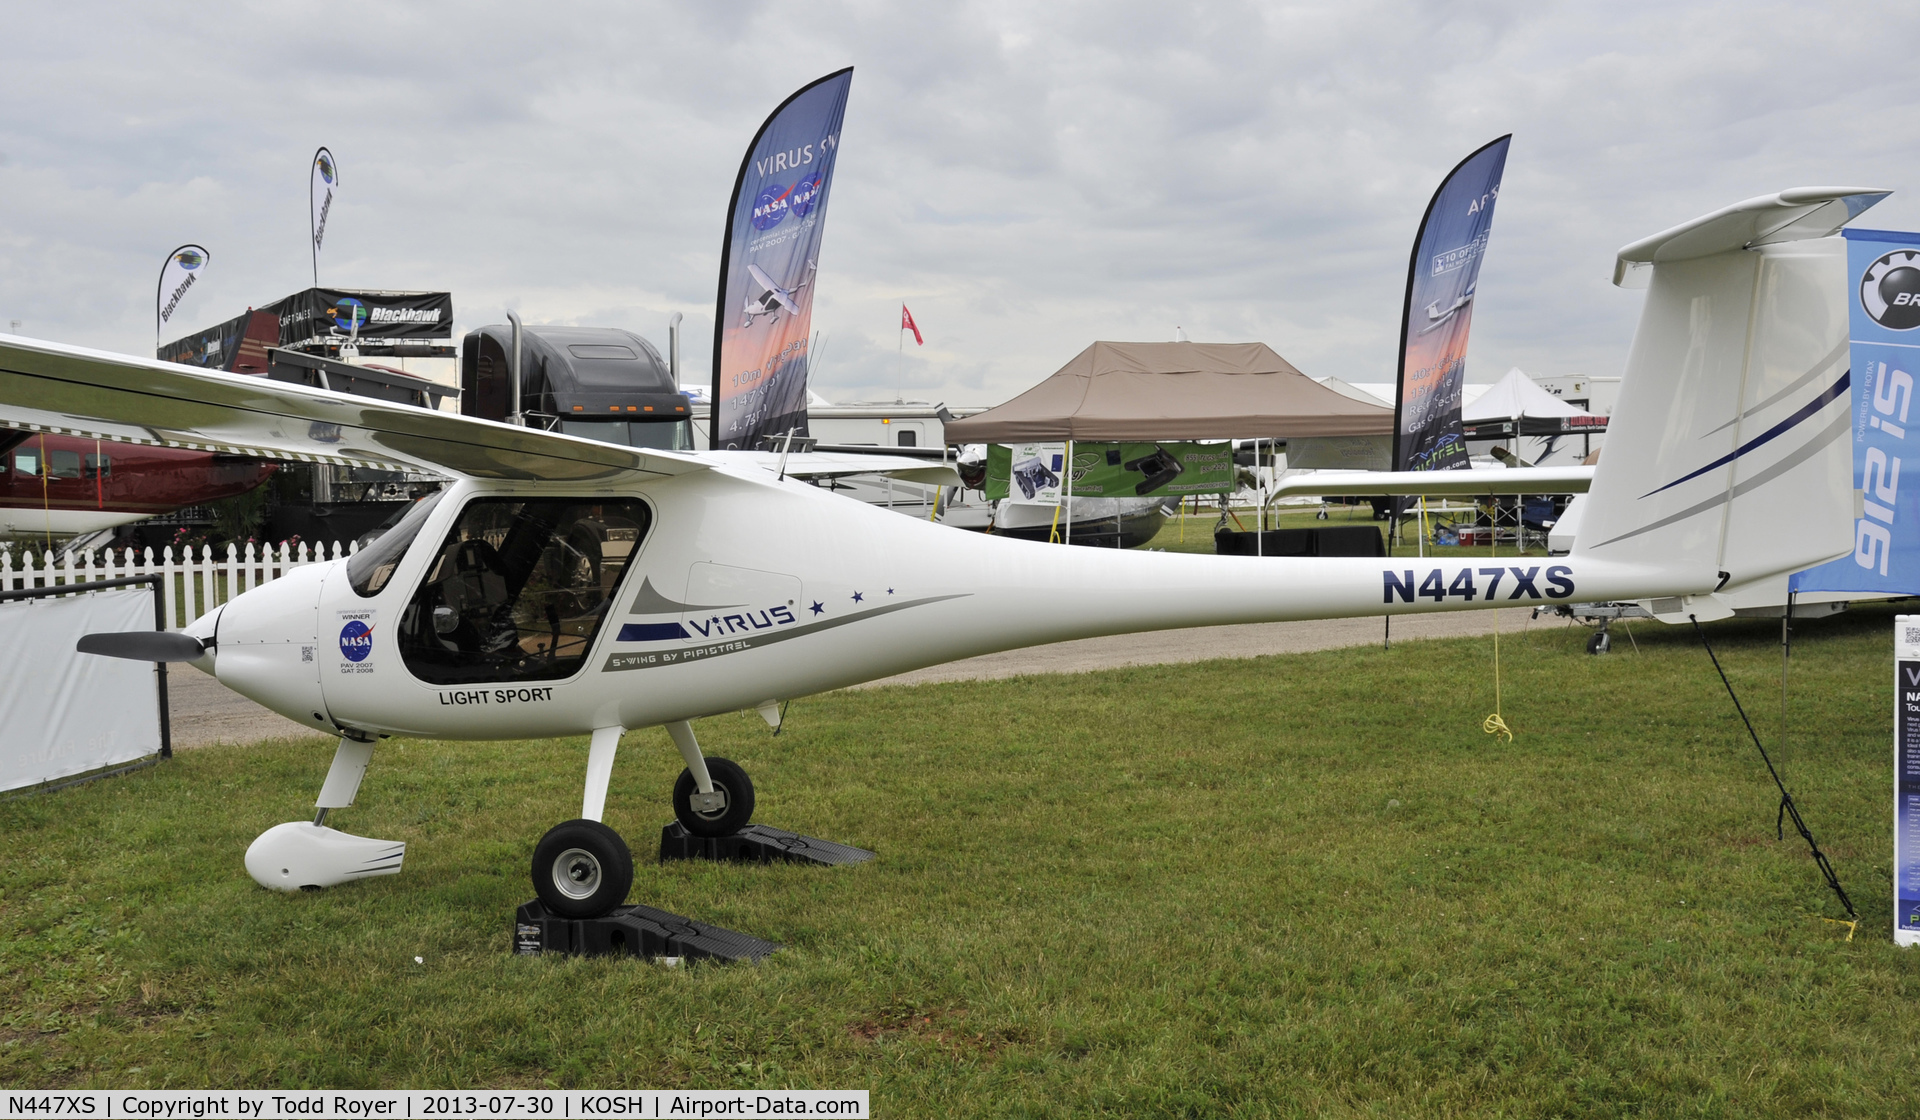 N447XS, Pipistrel Virus SW C/N 383 VSW 100 LSA, Airventure 2013